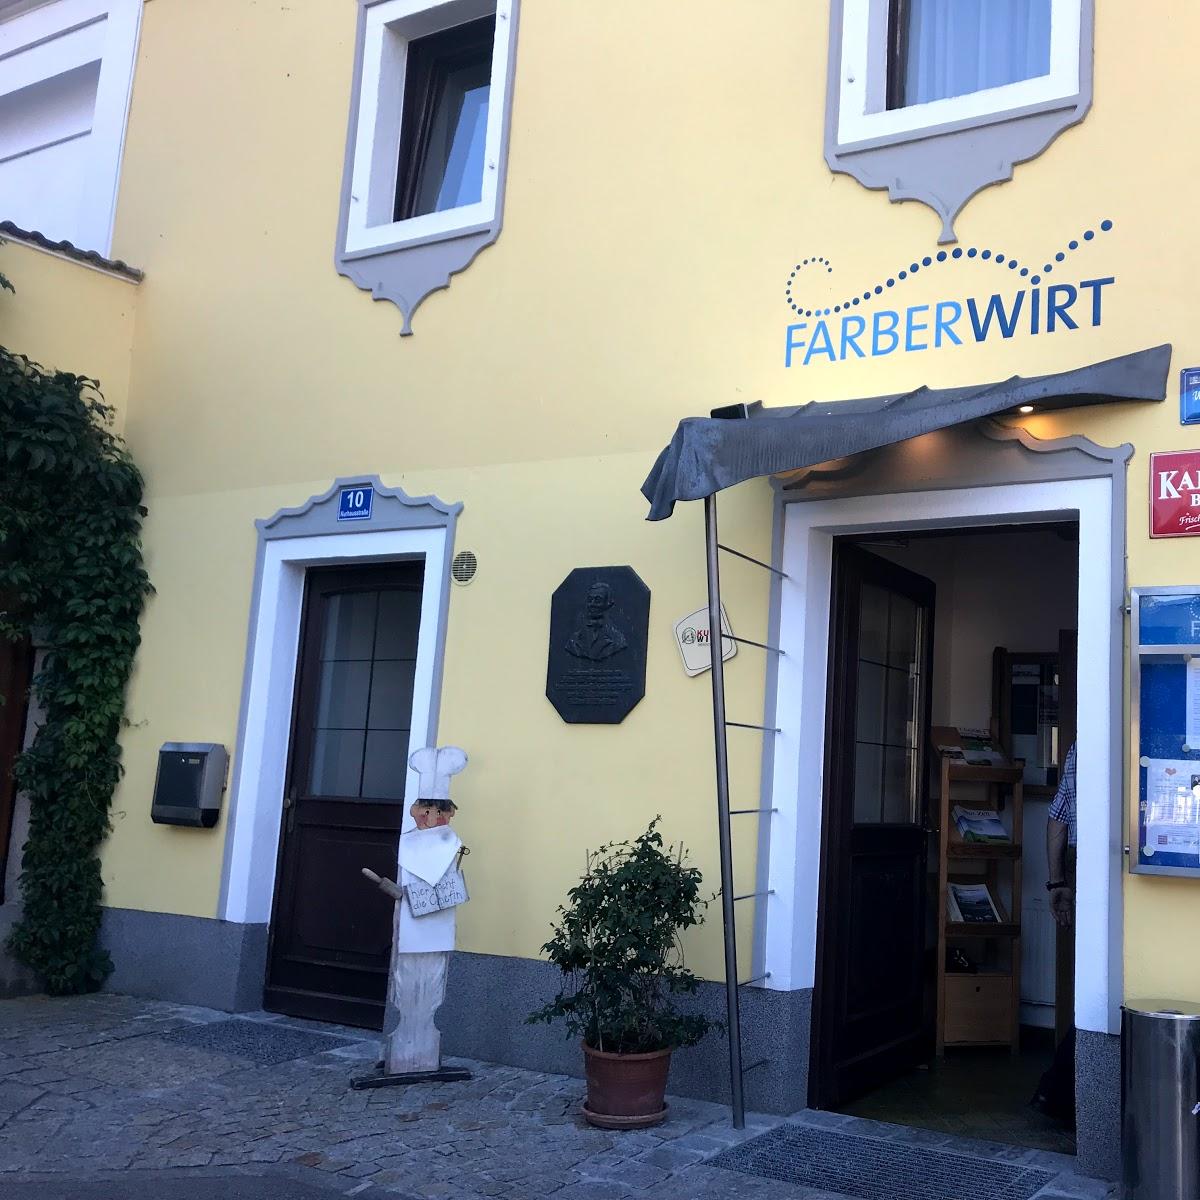 Restaurant "Färberwirt" in Bad Zell